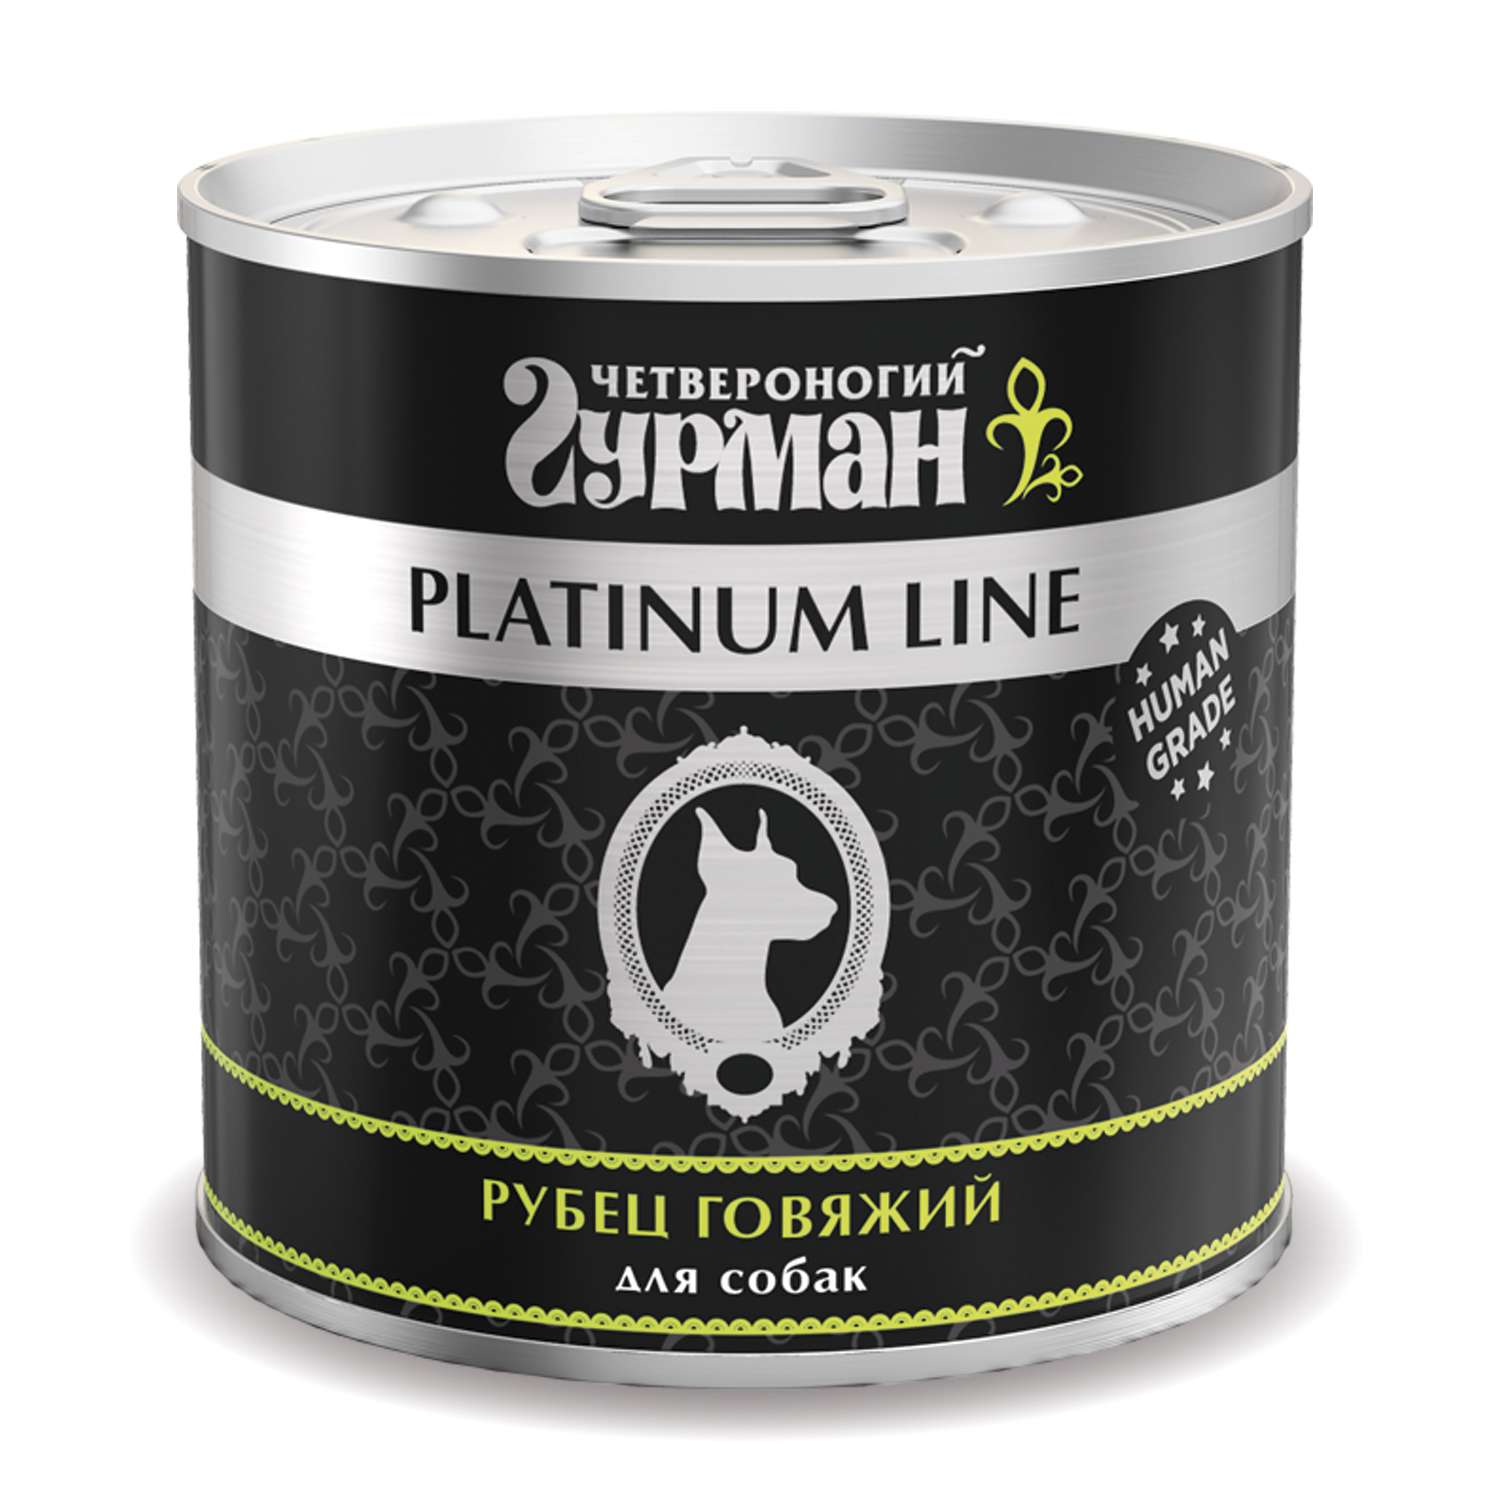 Корм для собак Четвероногий Гурман Platinum рубец говяжий в желе 500г - фото 1